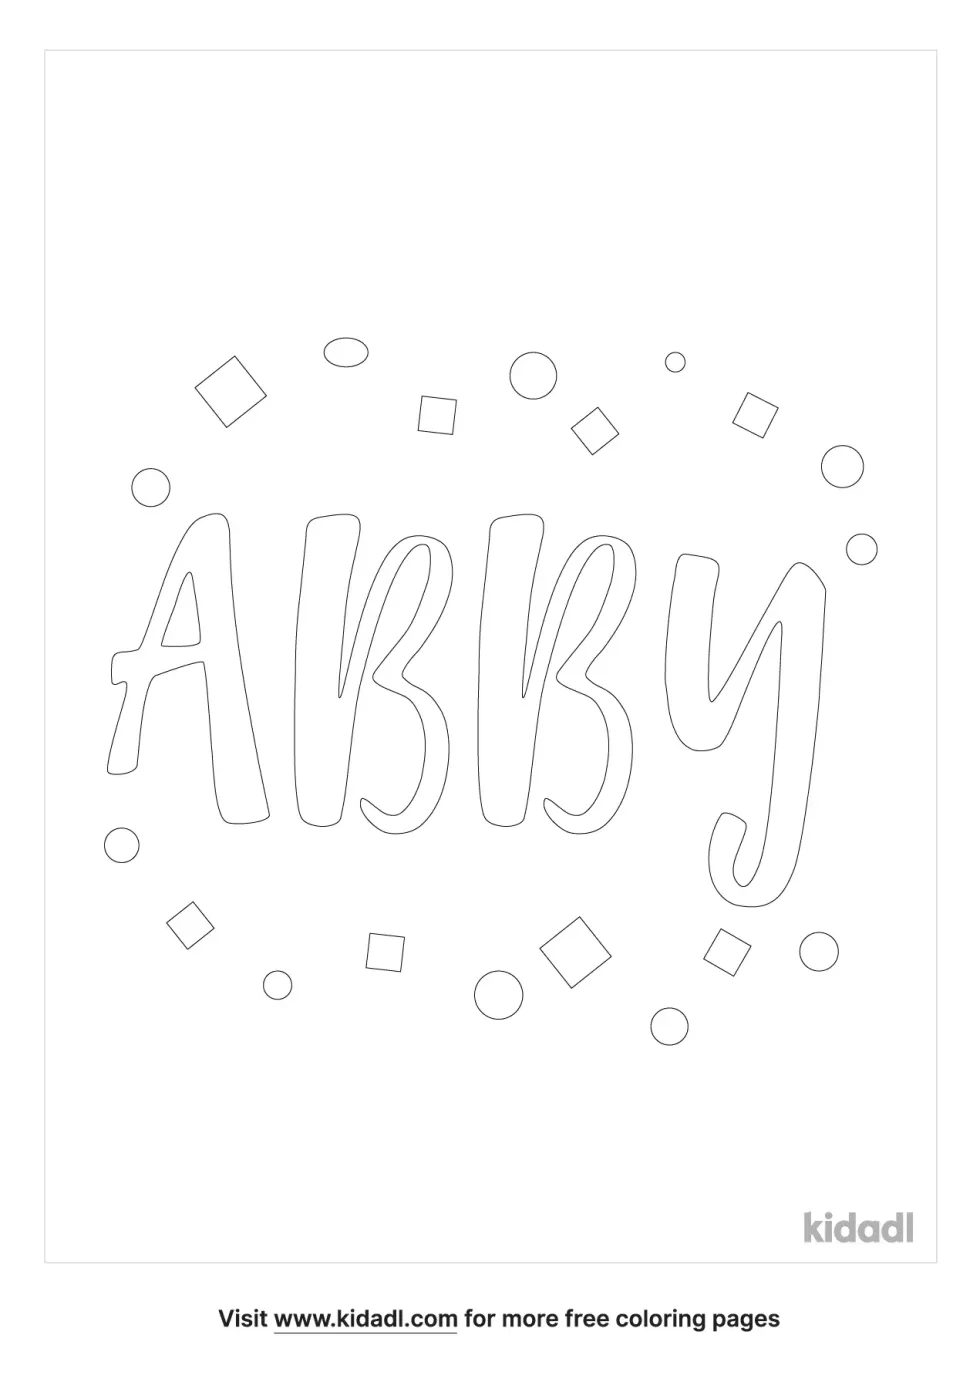 Abby Name